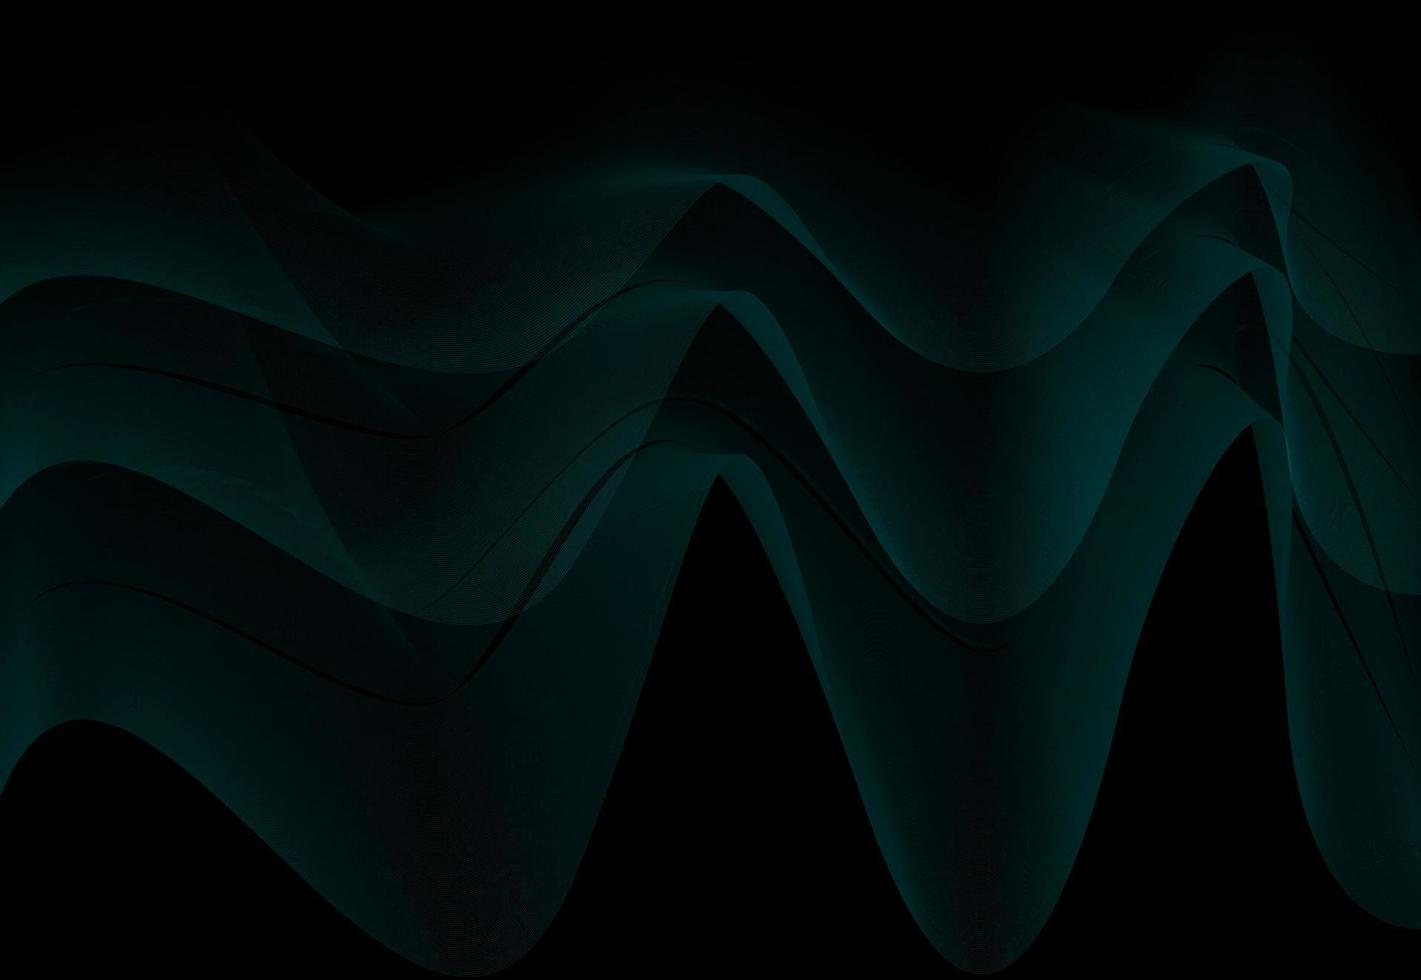 fondo negro con ondas de línea de degradado azul, formando un espacio. con el concepto de tecnología de ondas sonoras. diseño digital con tapa monocromática. plantillas modernas vector